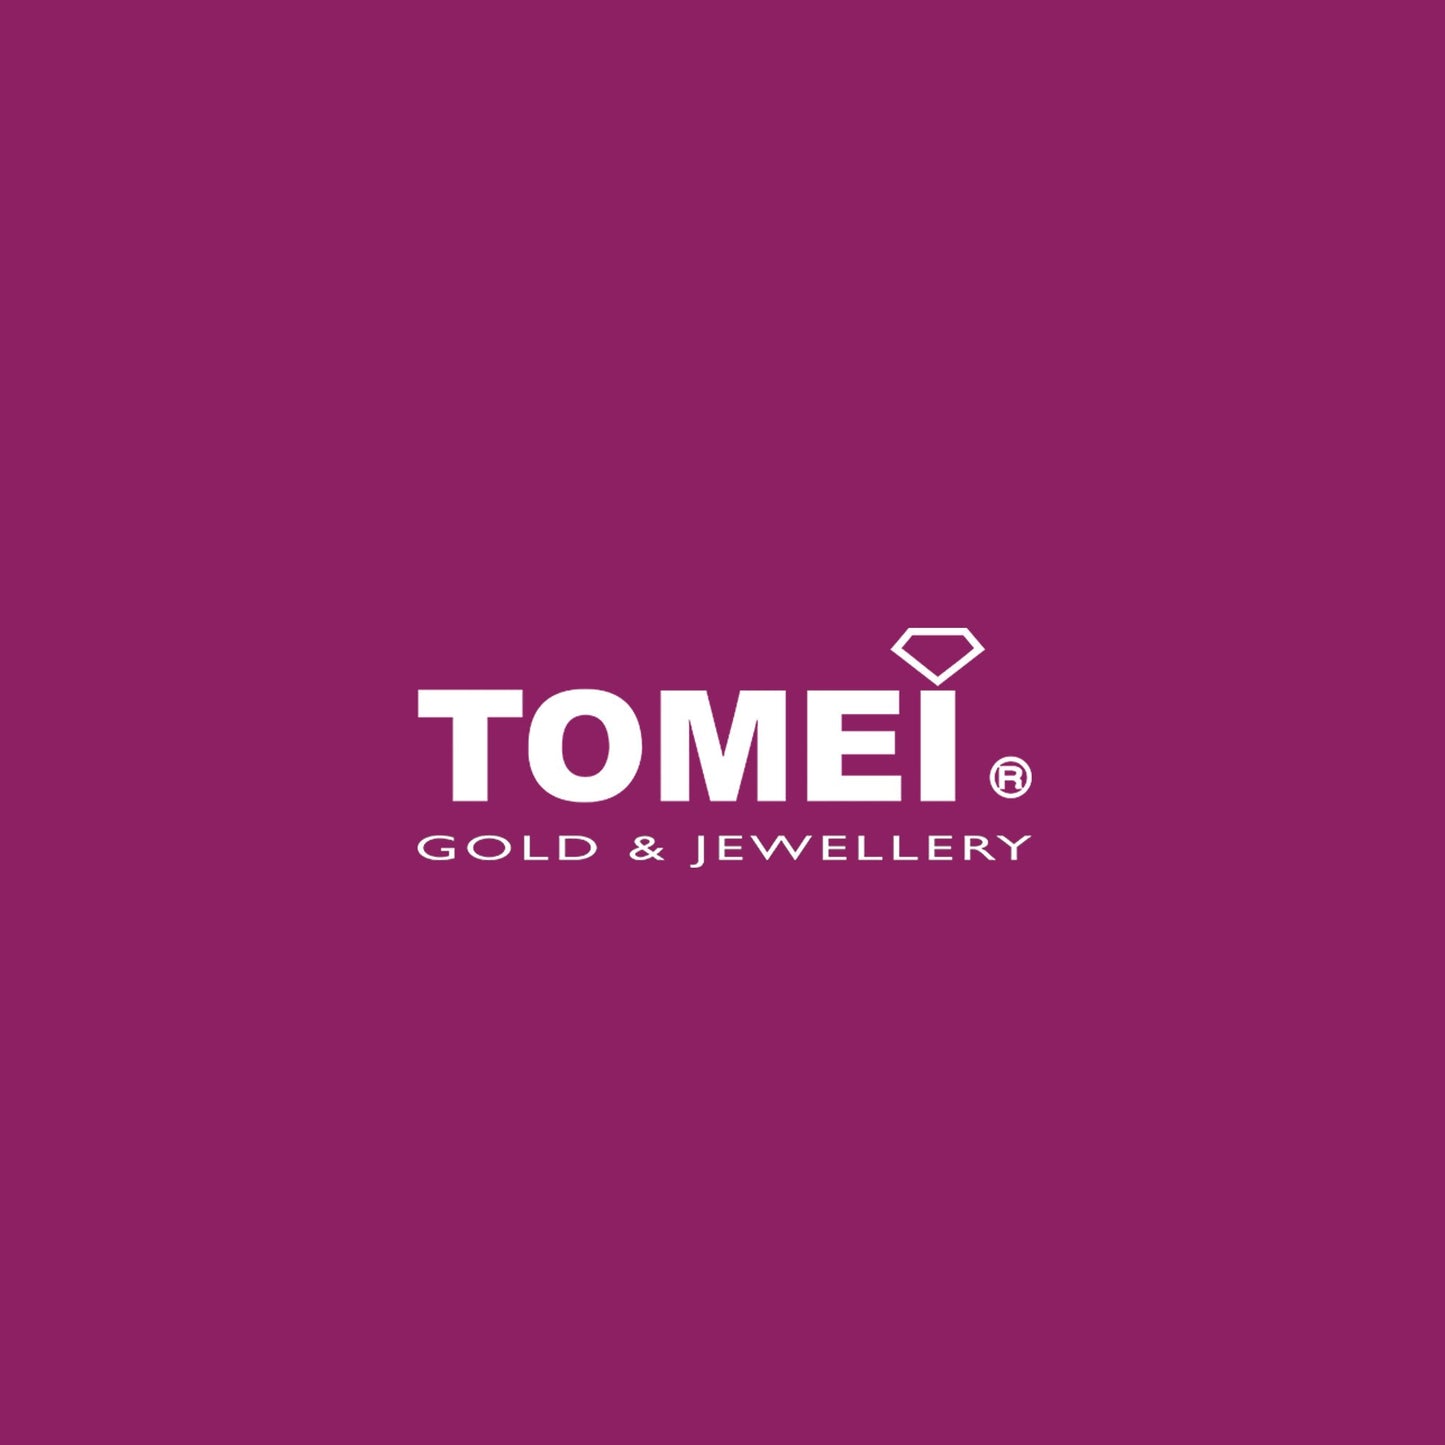 TOMEI Double Strands Bracelet, White+Rose Gold 585